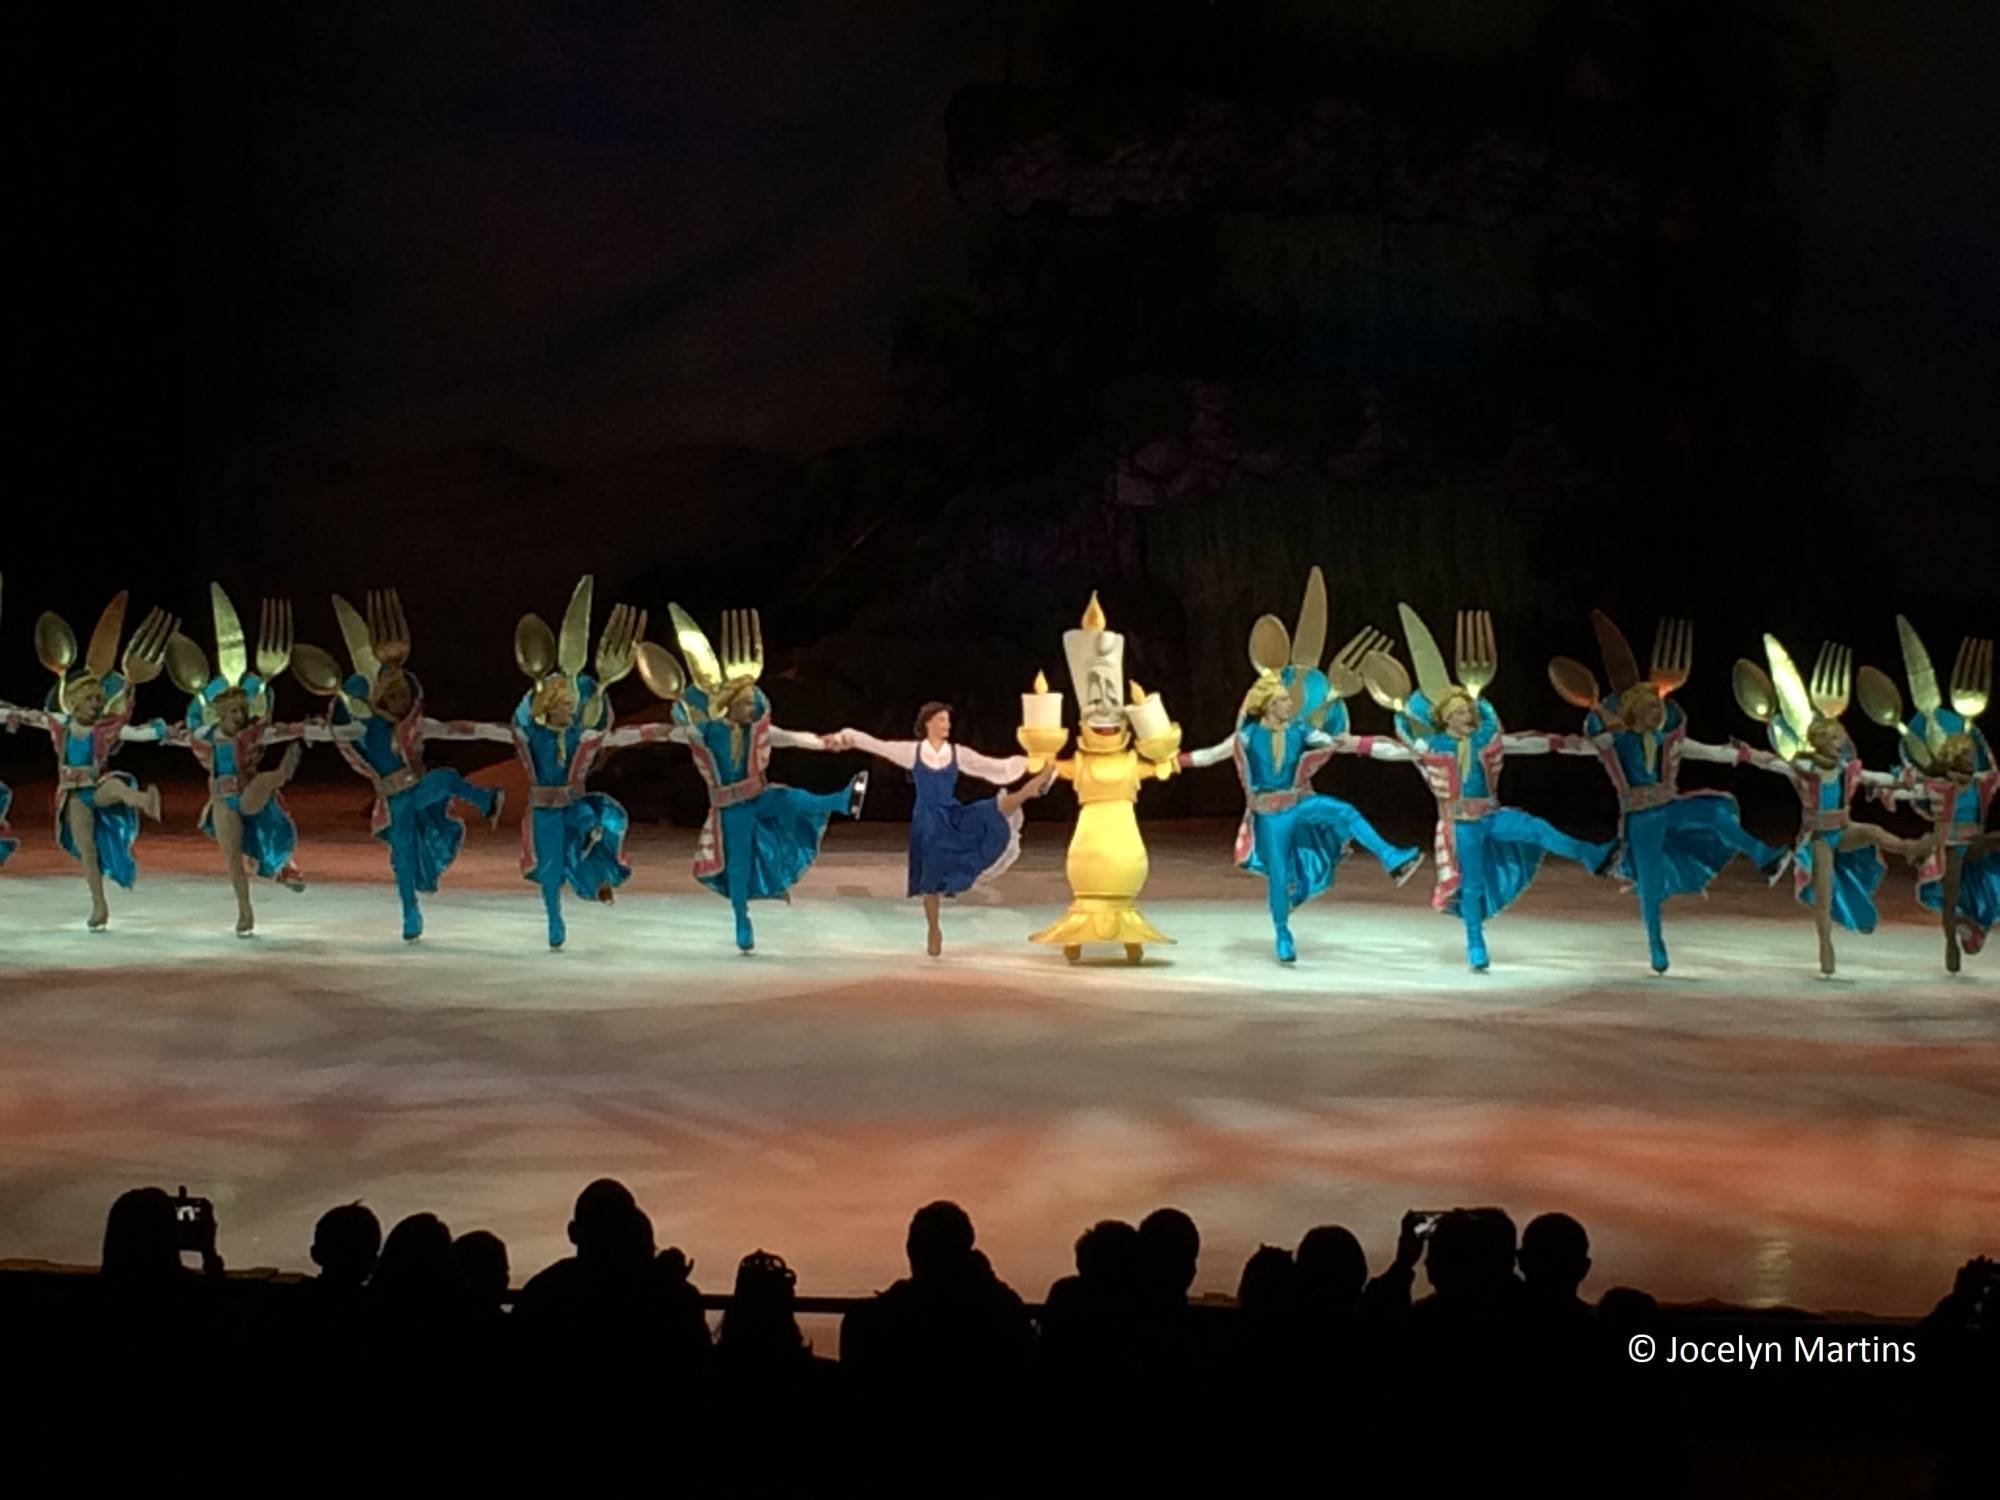 Enjoy a bit of Disney Magic at home with Disney on Ice shows |PassPorter.com